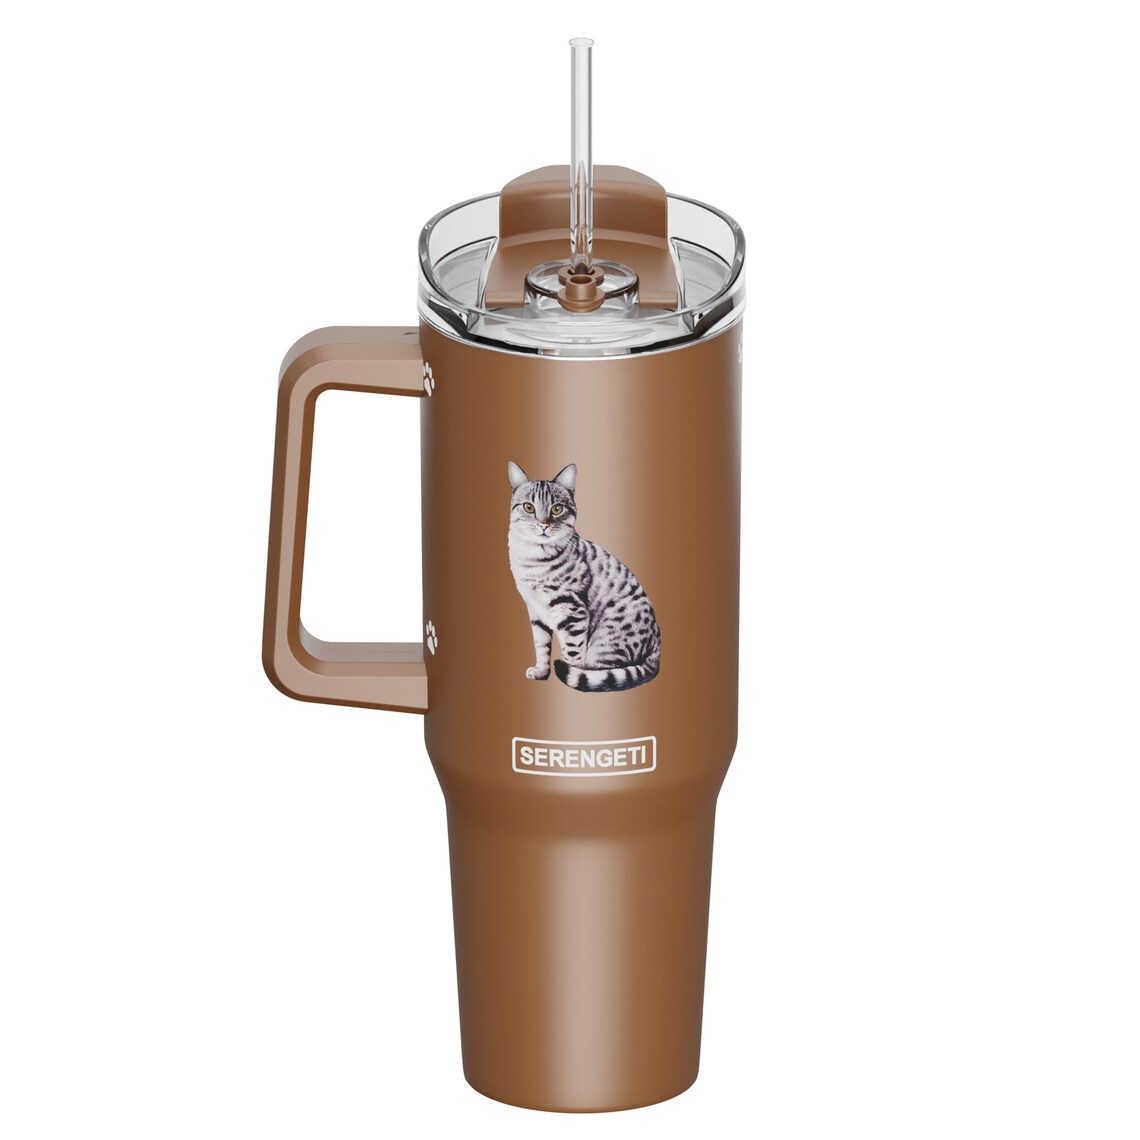 SERENGETI Stainless Steel Mug 40oz - Tabby Silver Cat